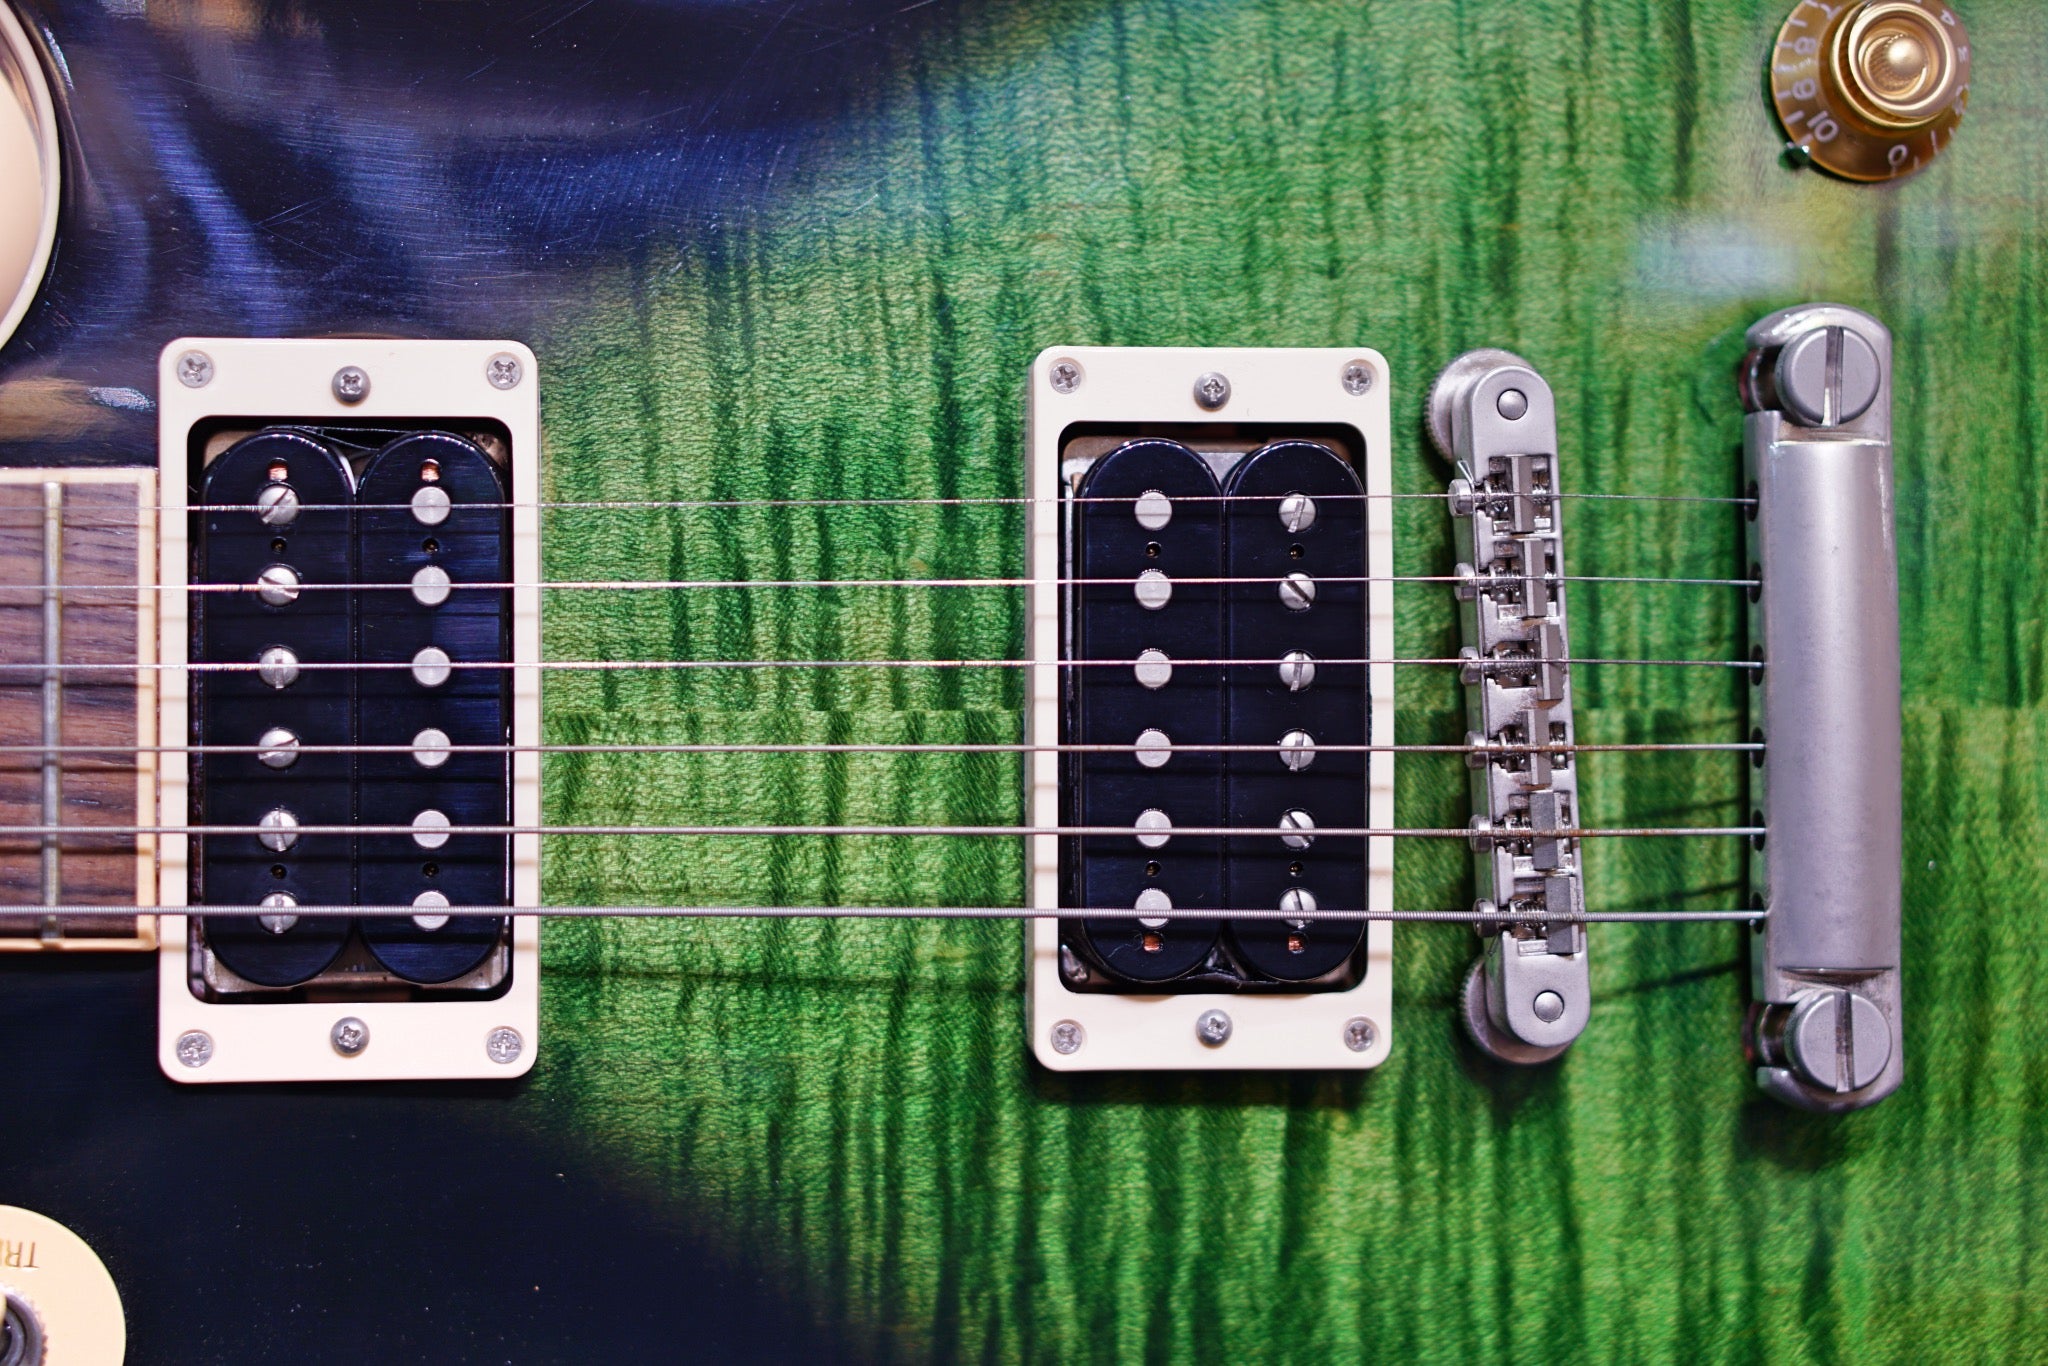 Gibson USA Slash anaconda - HIENDGUITAR   GIBSON GUITAR